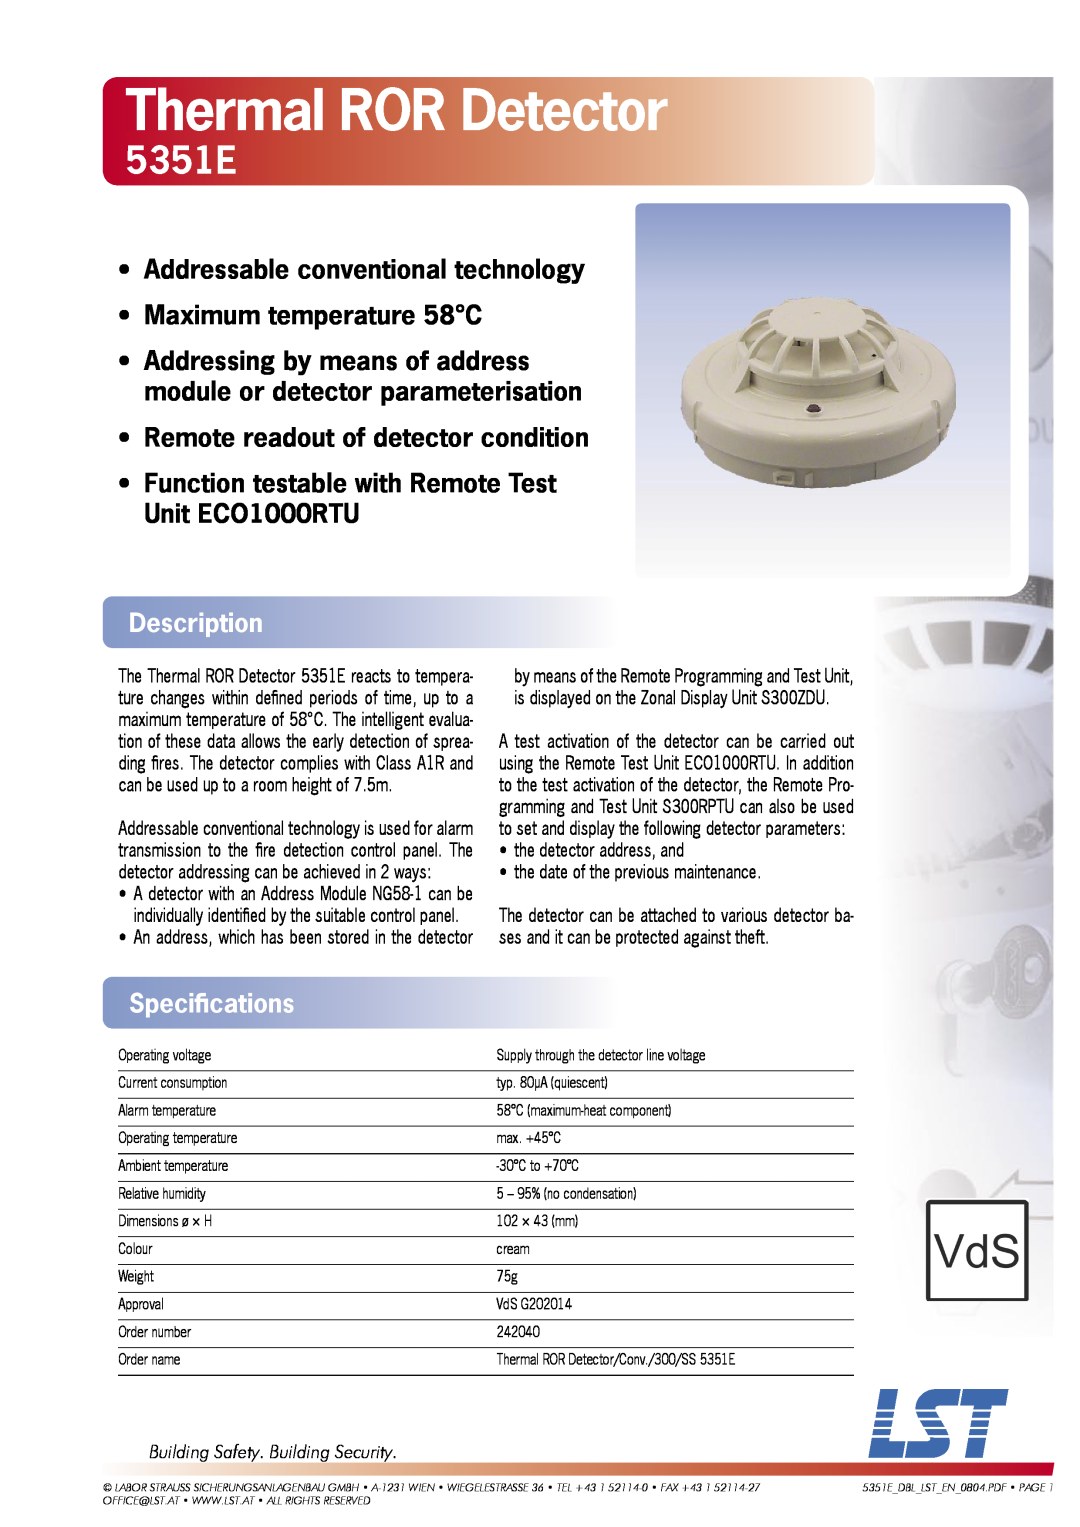 LST 5351E specifications Thermal ROR Detector, Addressable conventional technology, Maximum temperature 58C, Description 